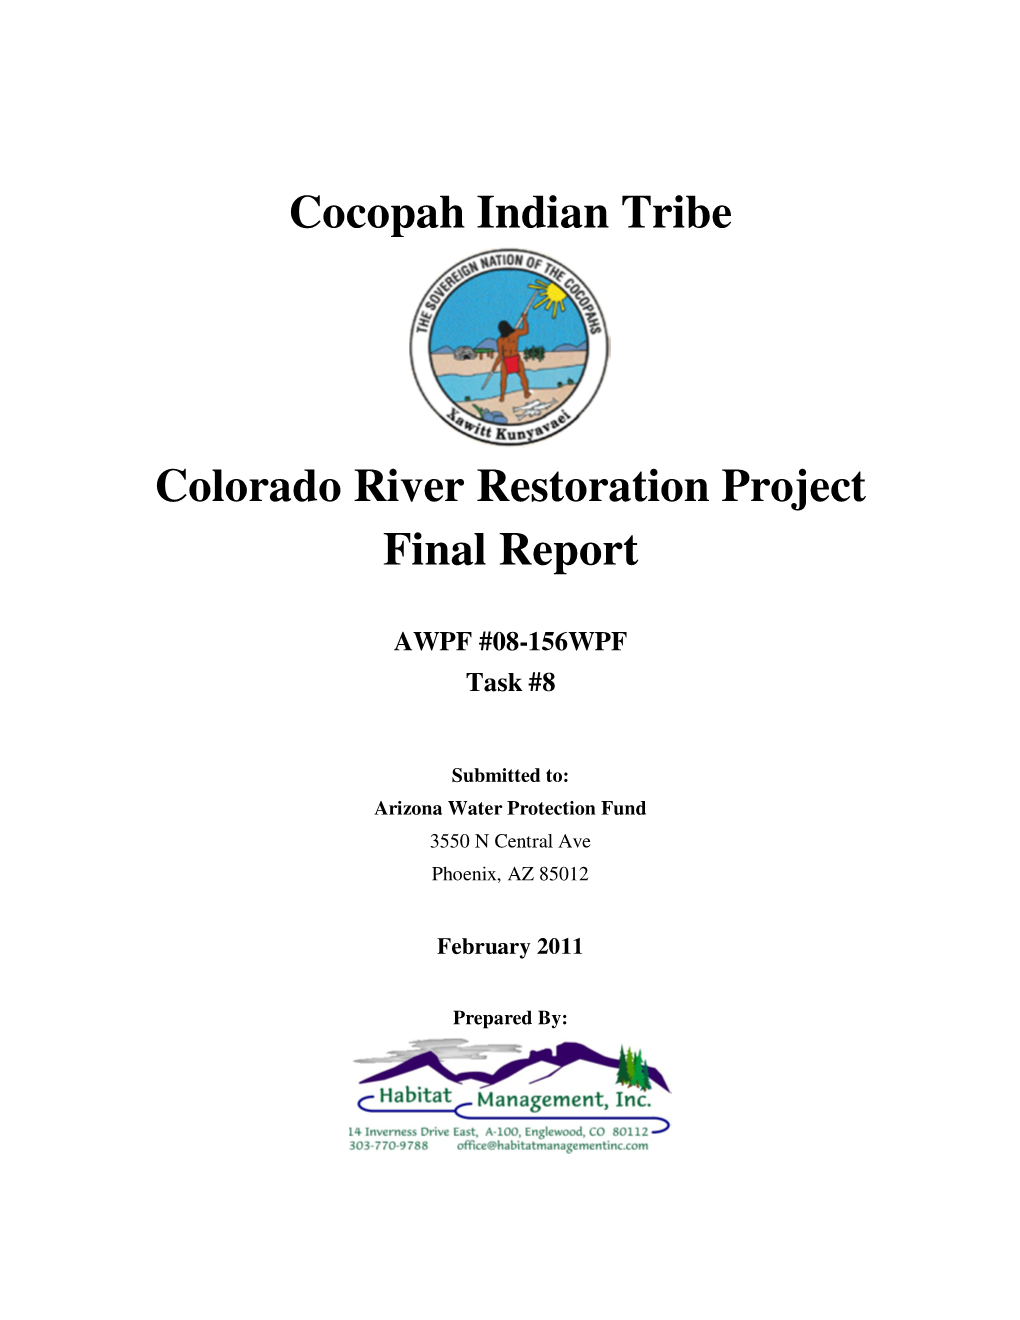 Cocopah Indian Tribe Colorado River